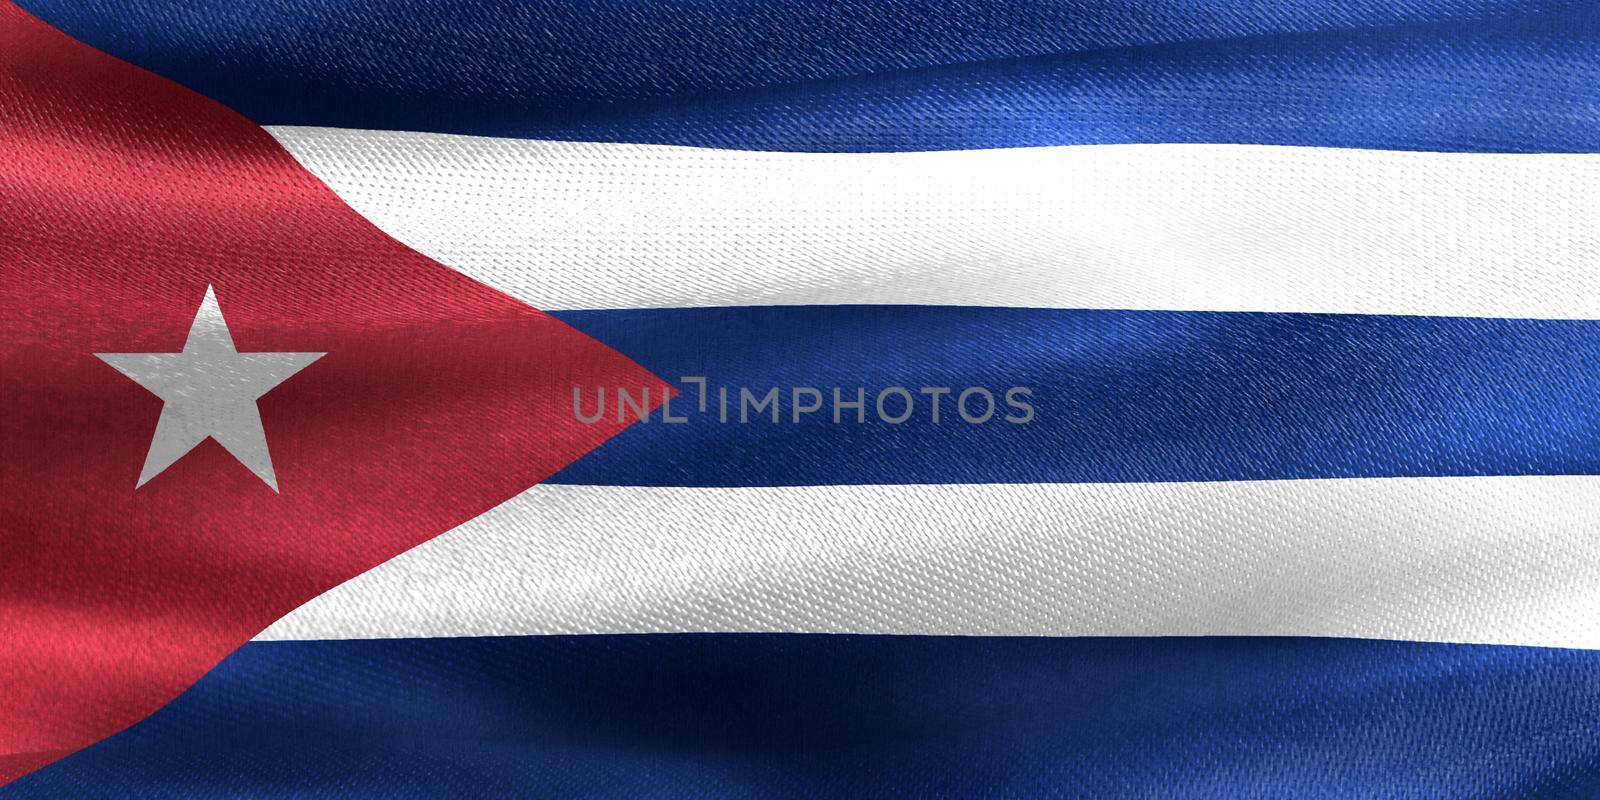 Cuba flag - realistic waving fabric flag by MP_foto71